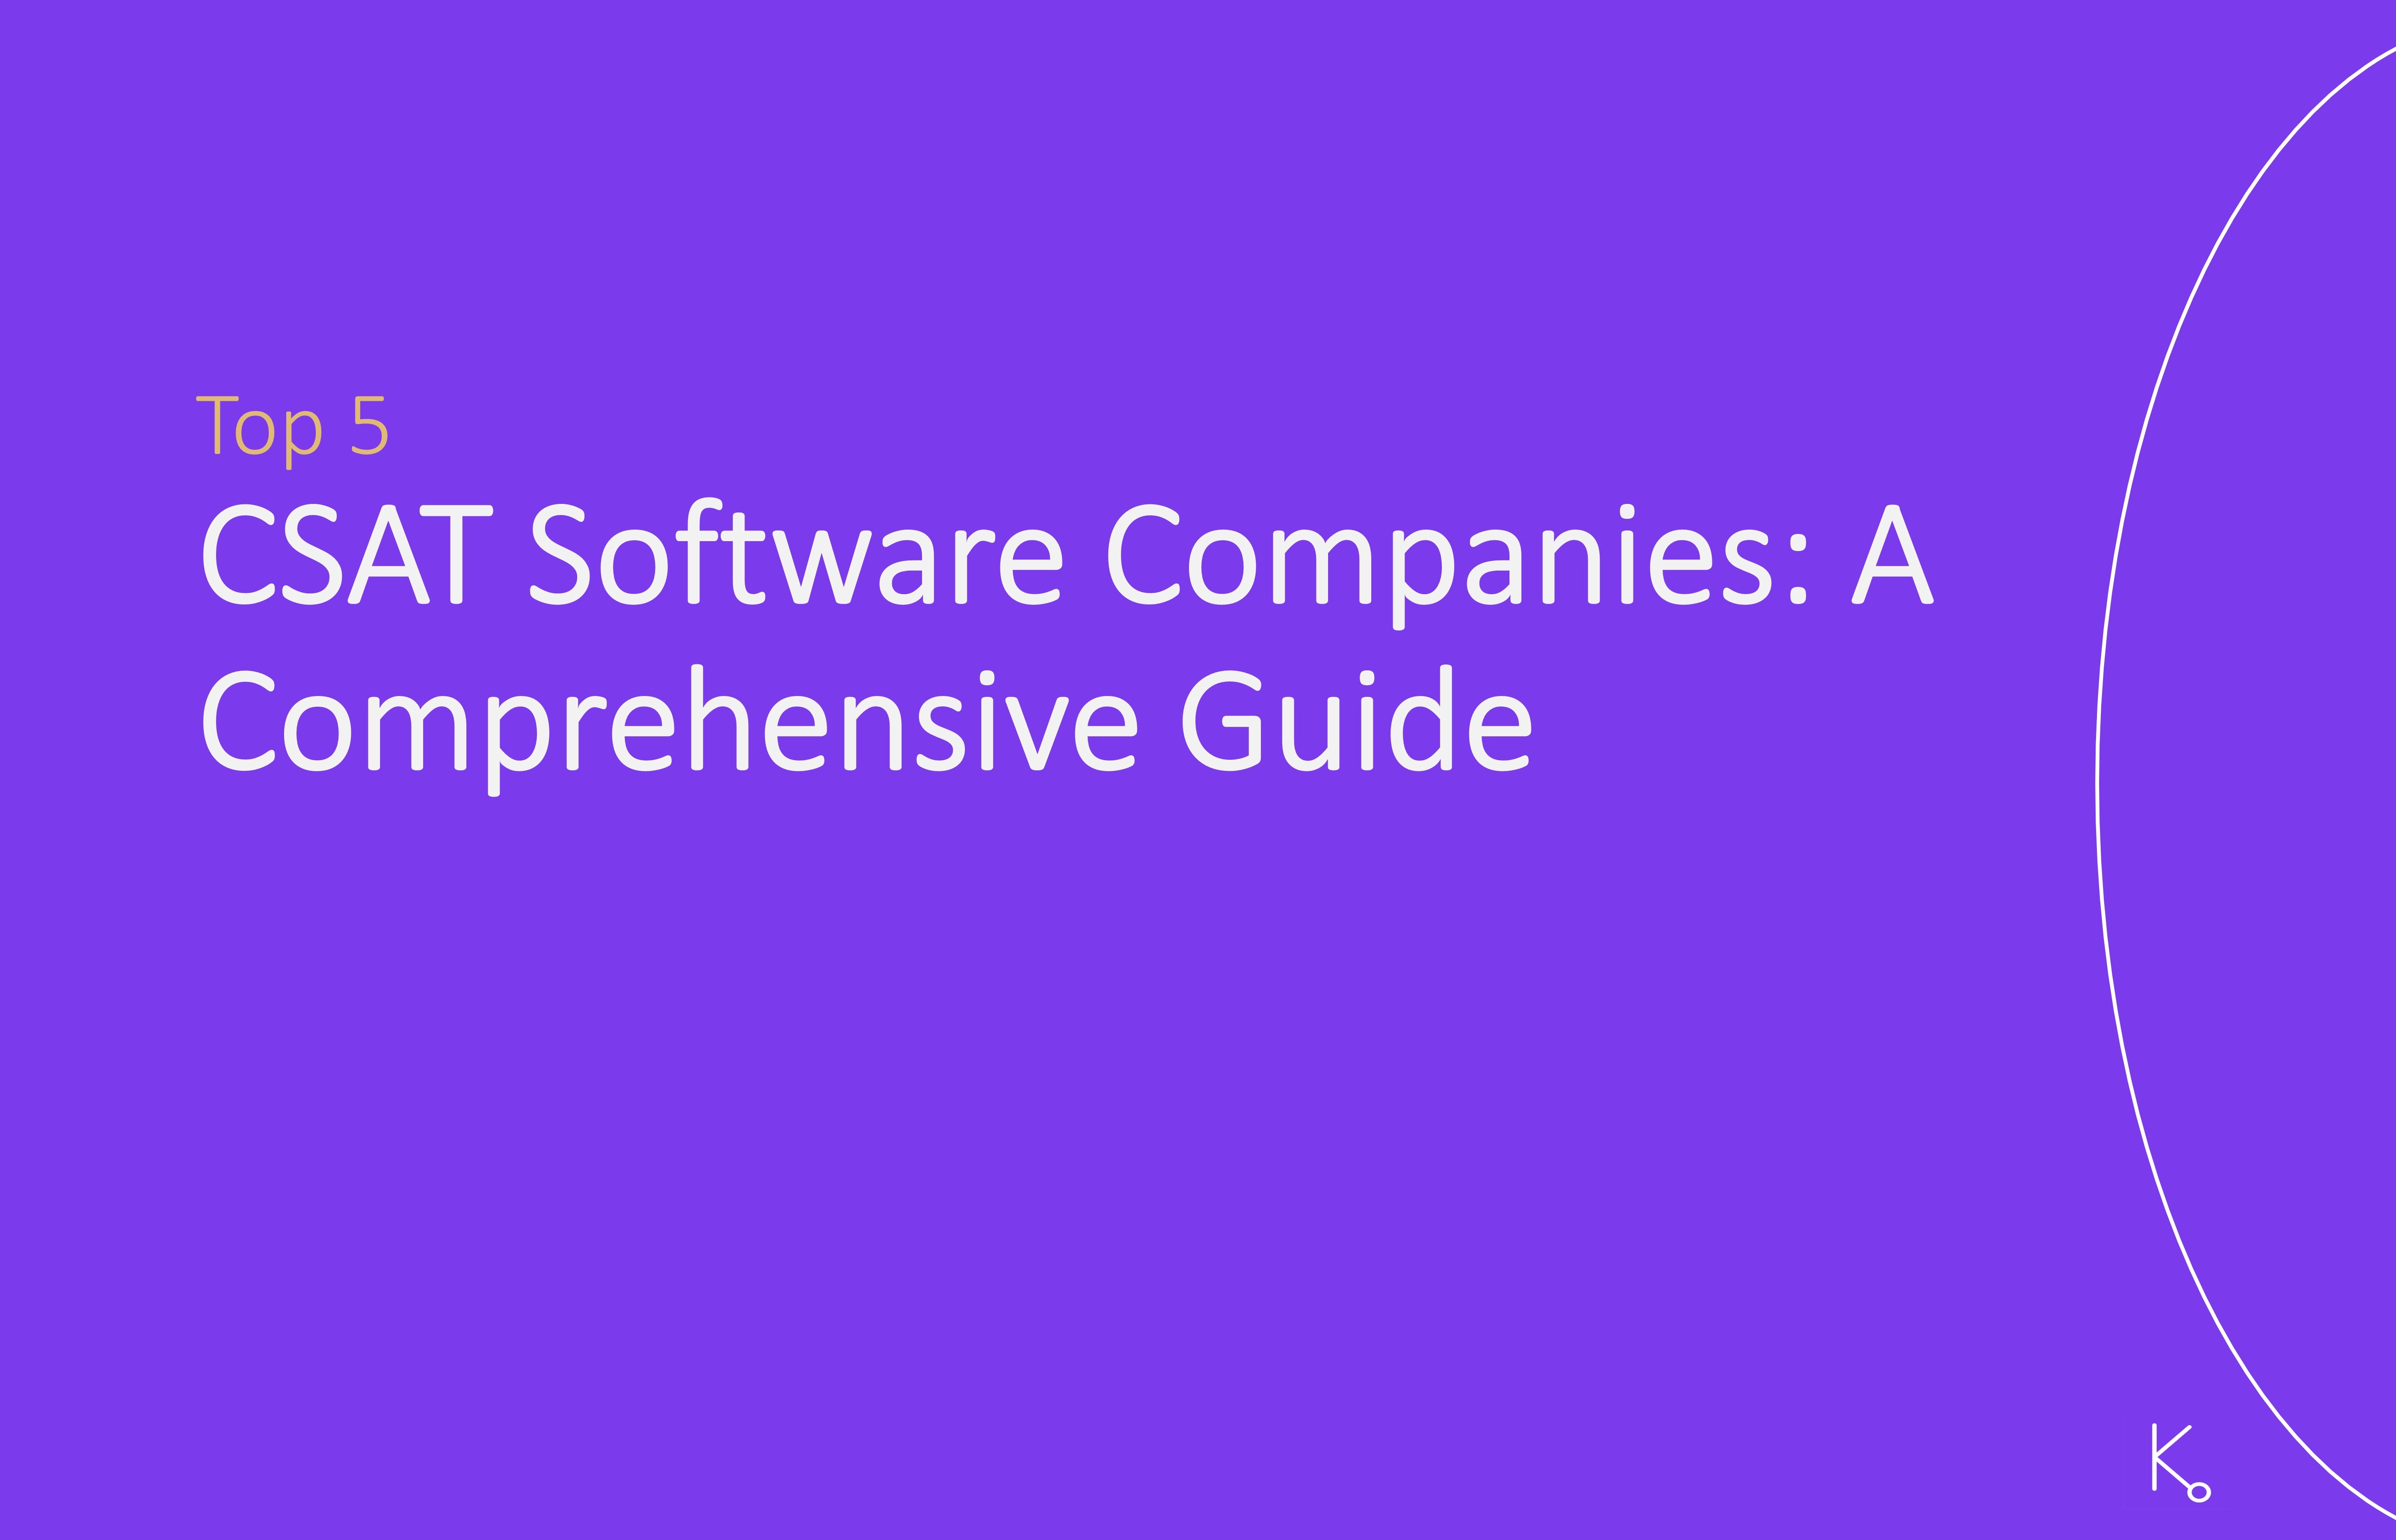 Top 5 NPS/CSAT Software Companies: A Comprehensive Guide